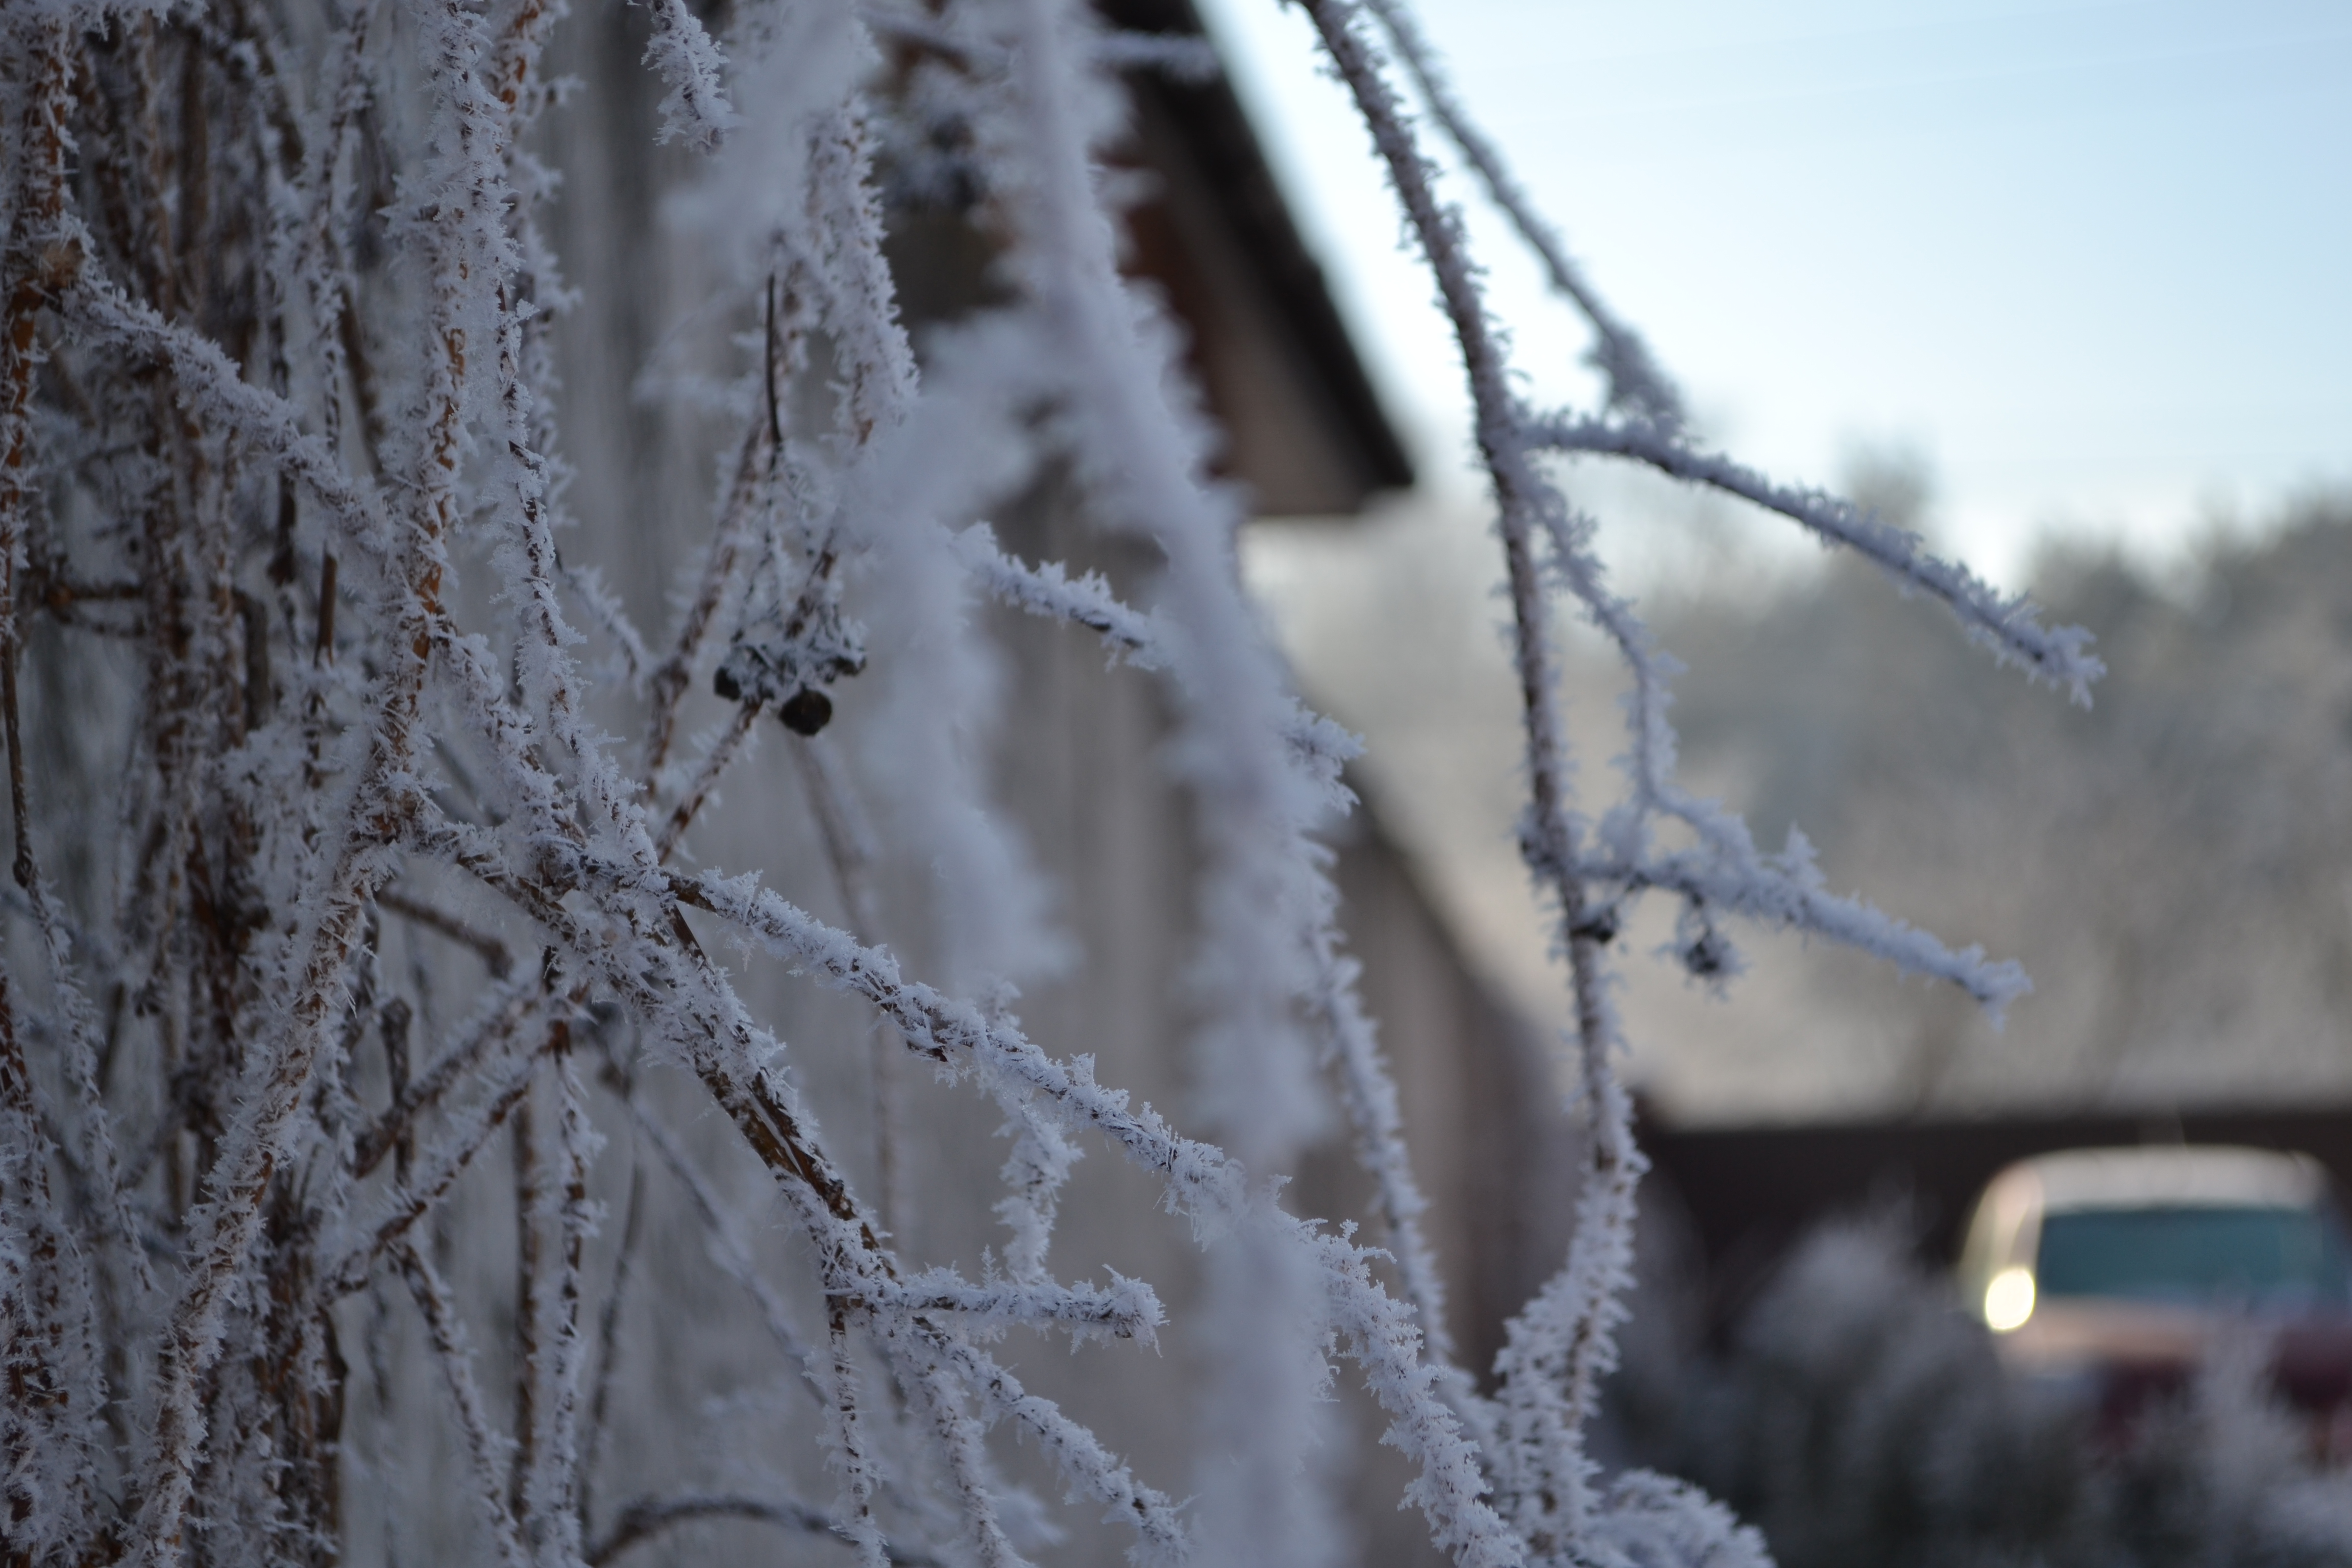 Frozen branches photo